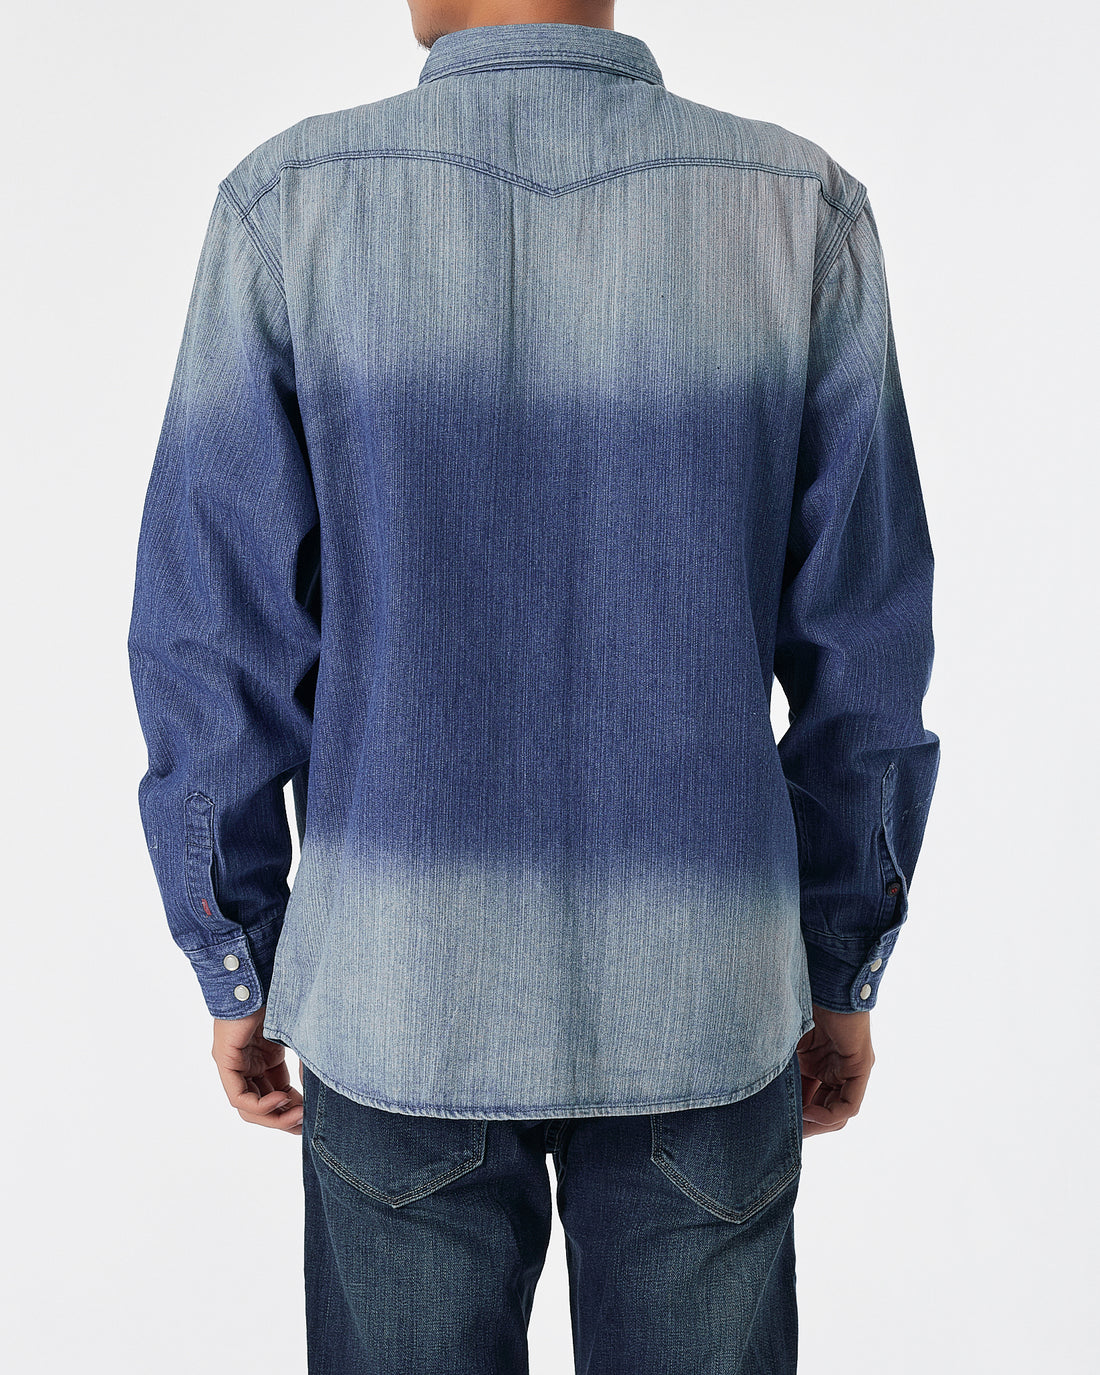 LEV Denim Men Blue Shirts Long Sleeve 24.90